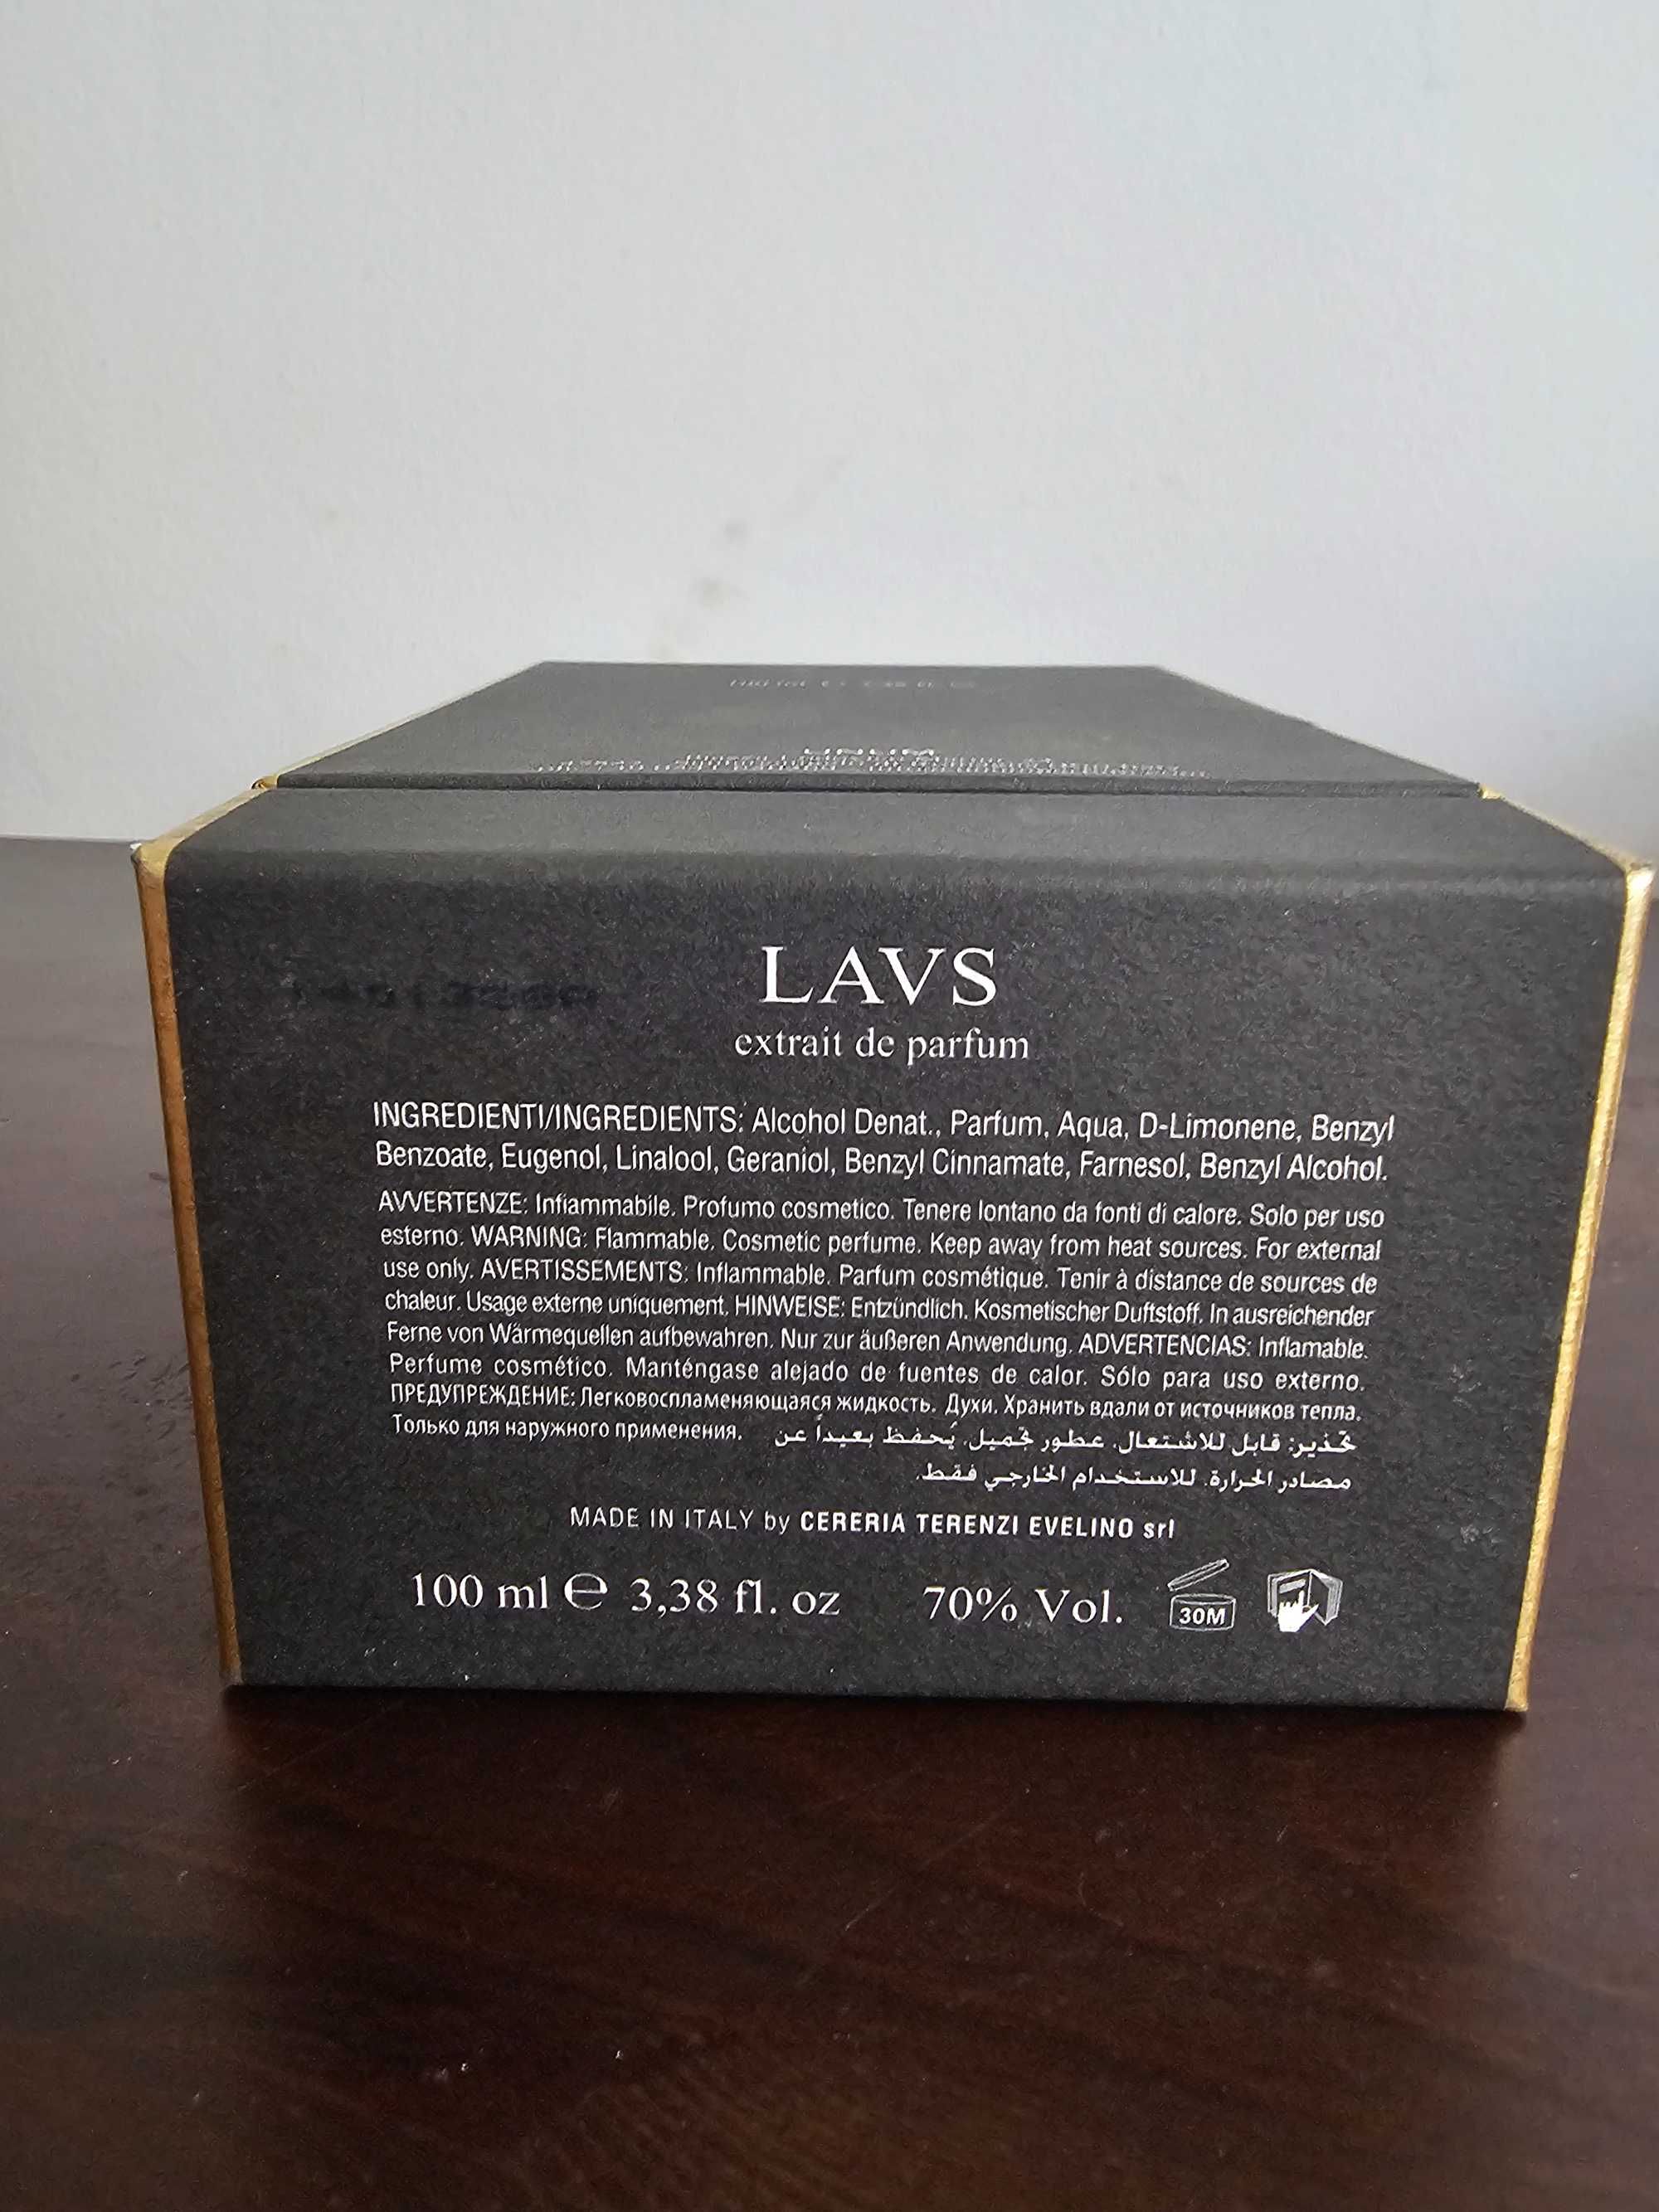 Unum Lavs 100 ml Ekstrakt Perfum Opakowanie dla Kolekcjonera